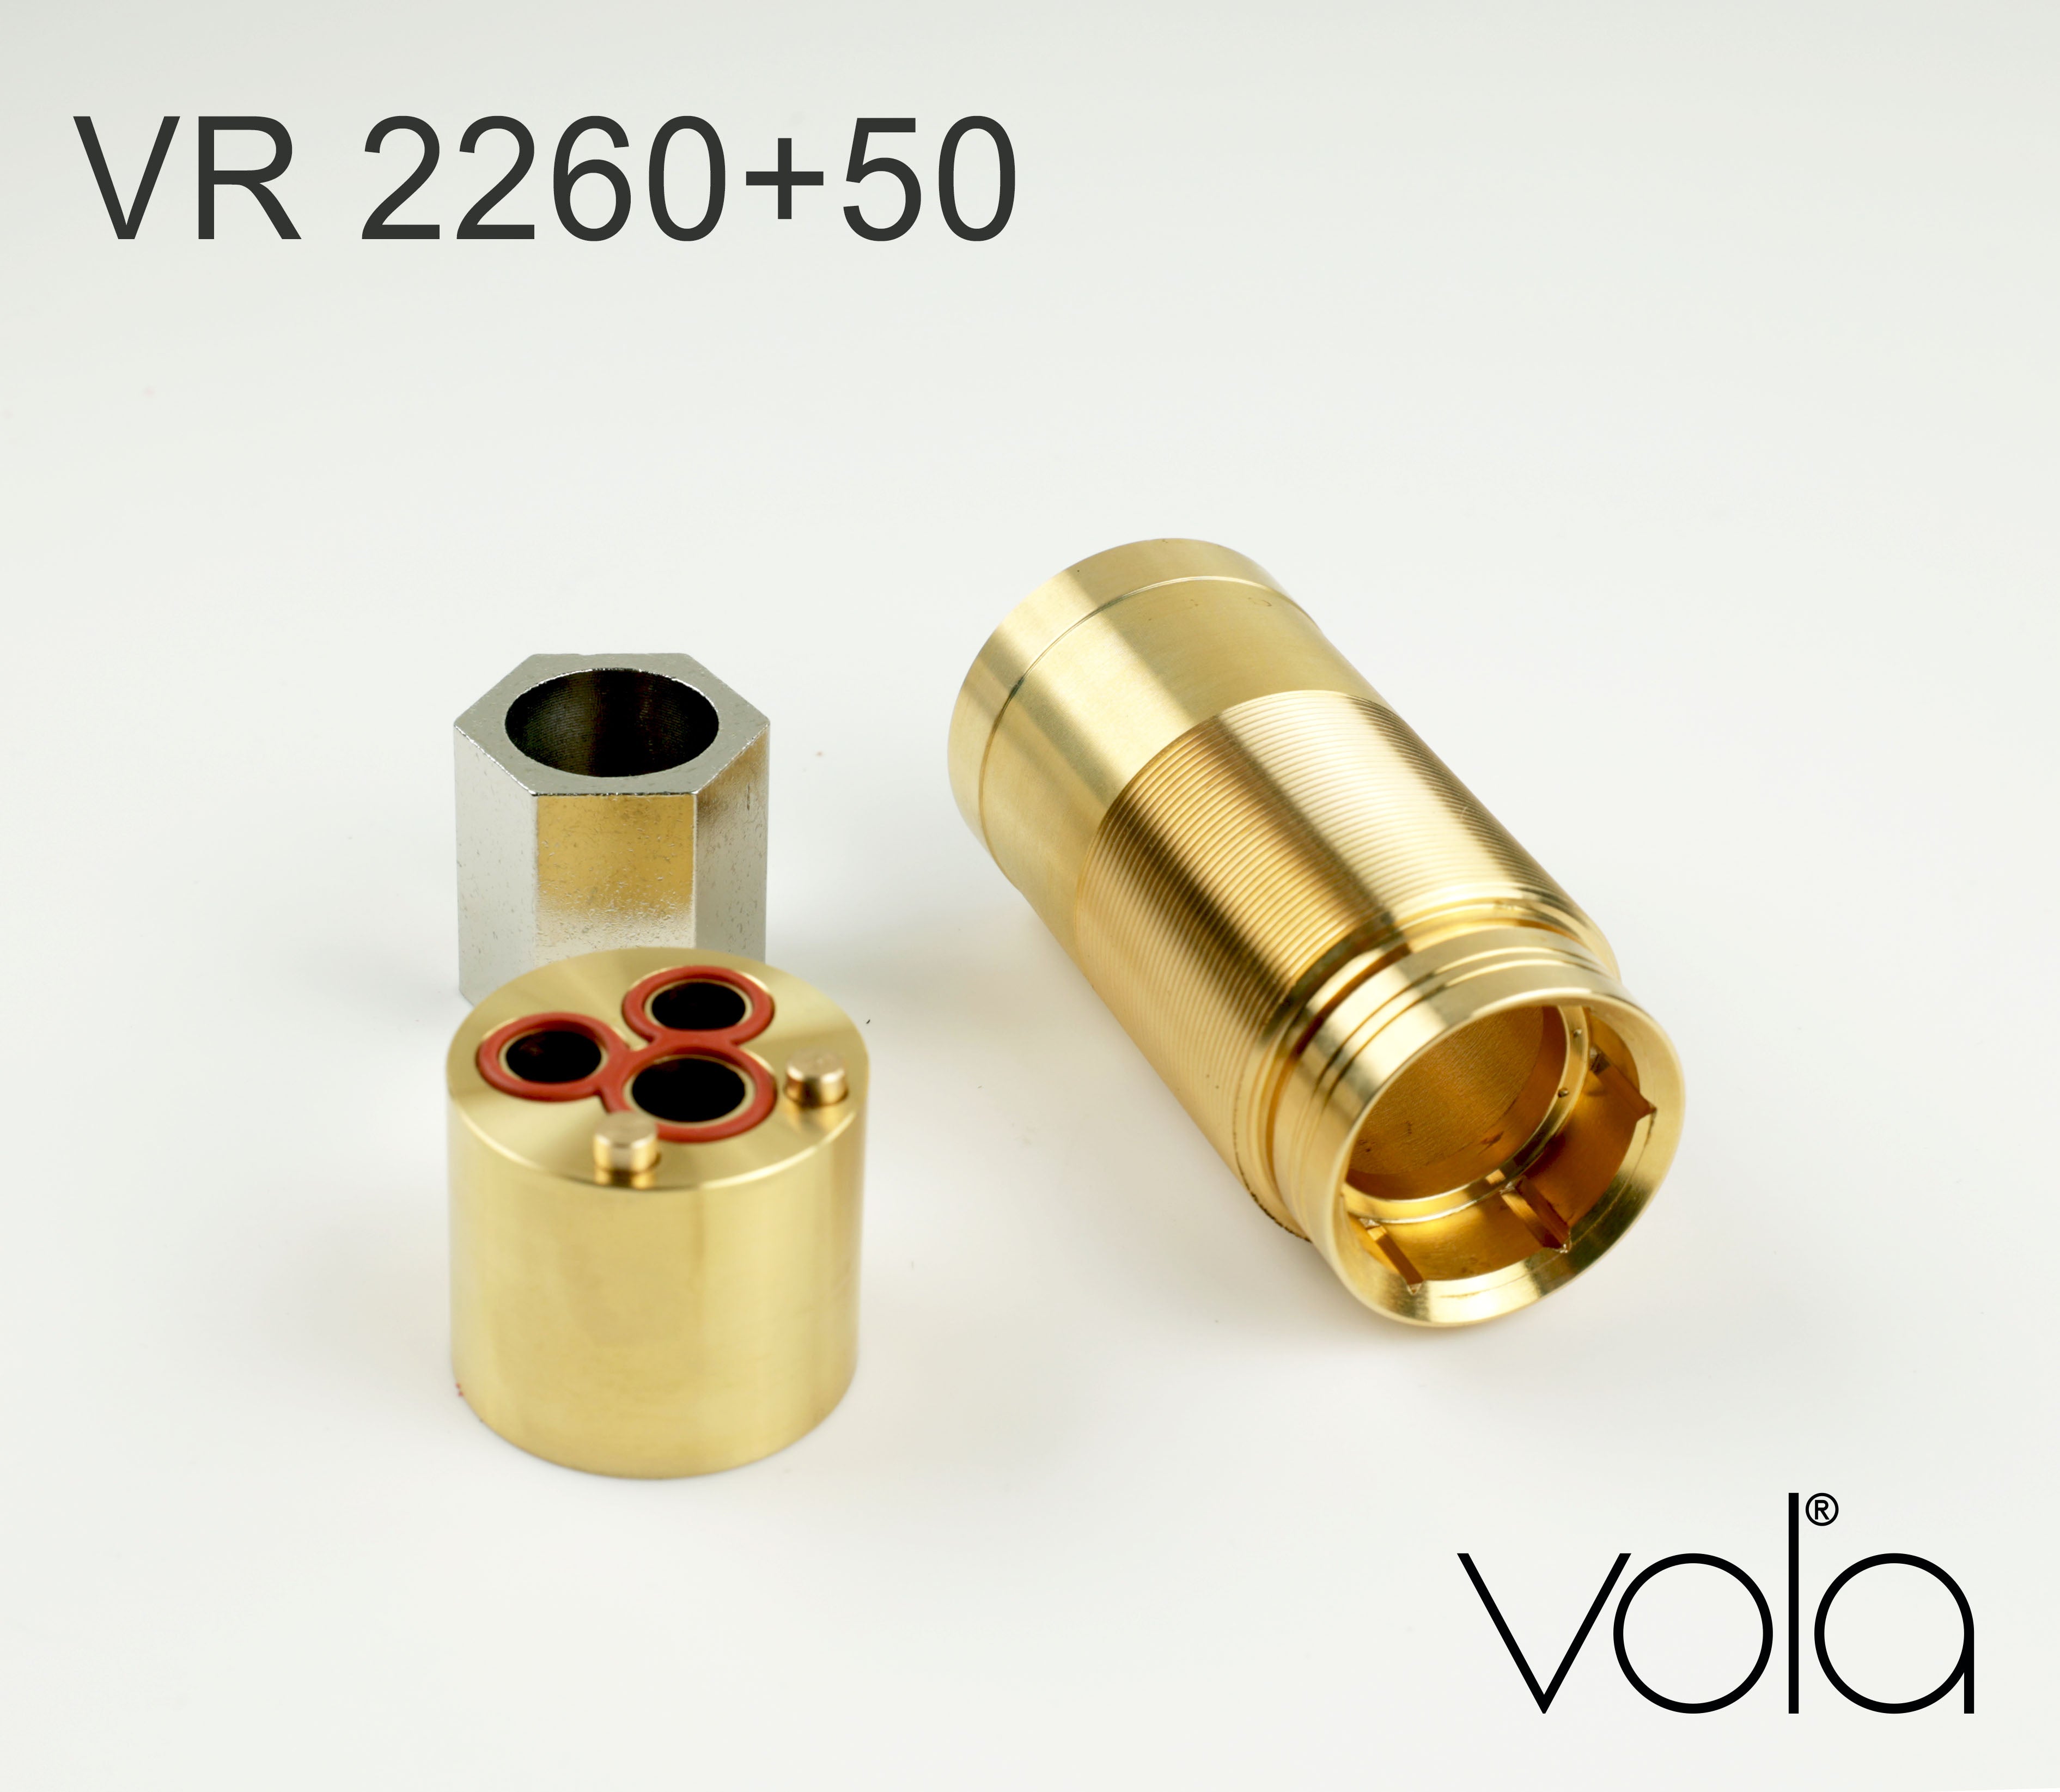 VOLA VR2260+50